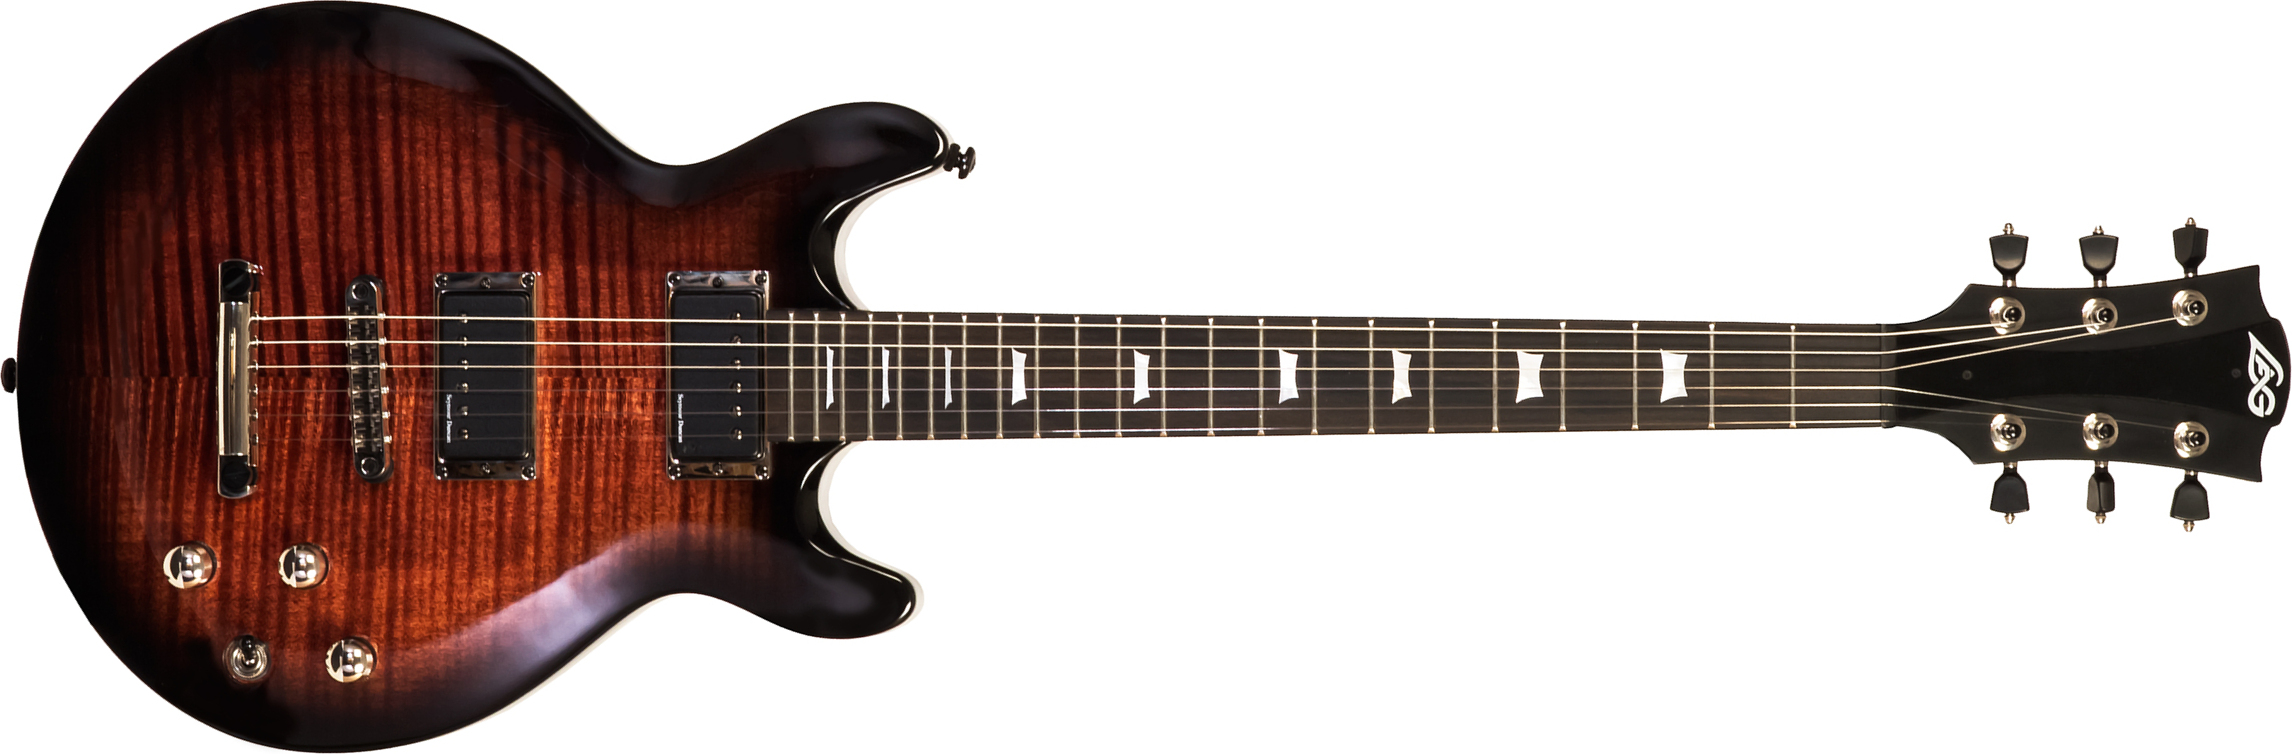 Lag Roxane R500 2h Seymour Duncan Ht Bw - Black Shadow - Double cut electric guitar - Main picture